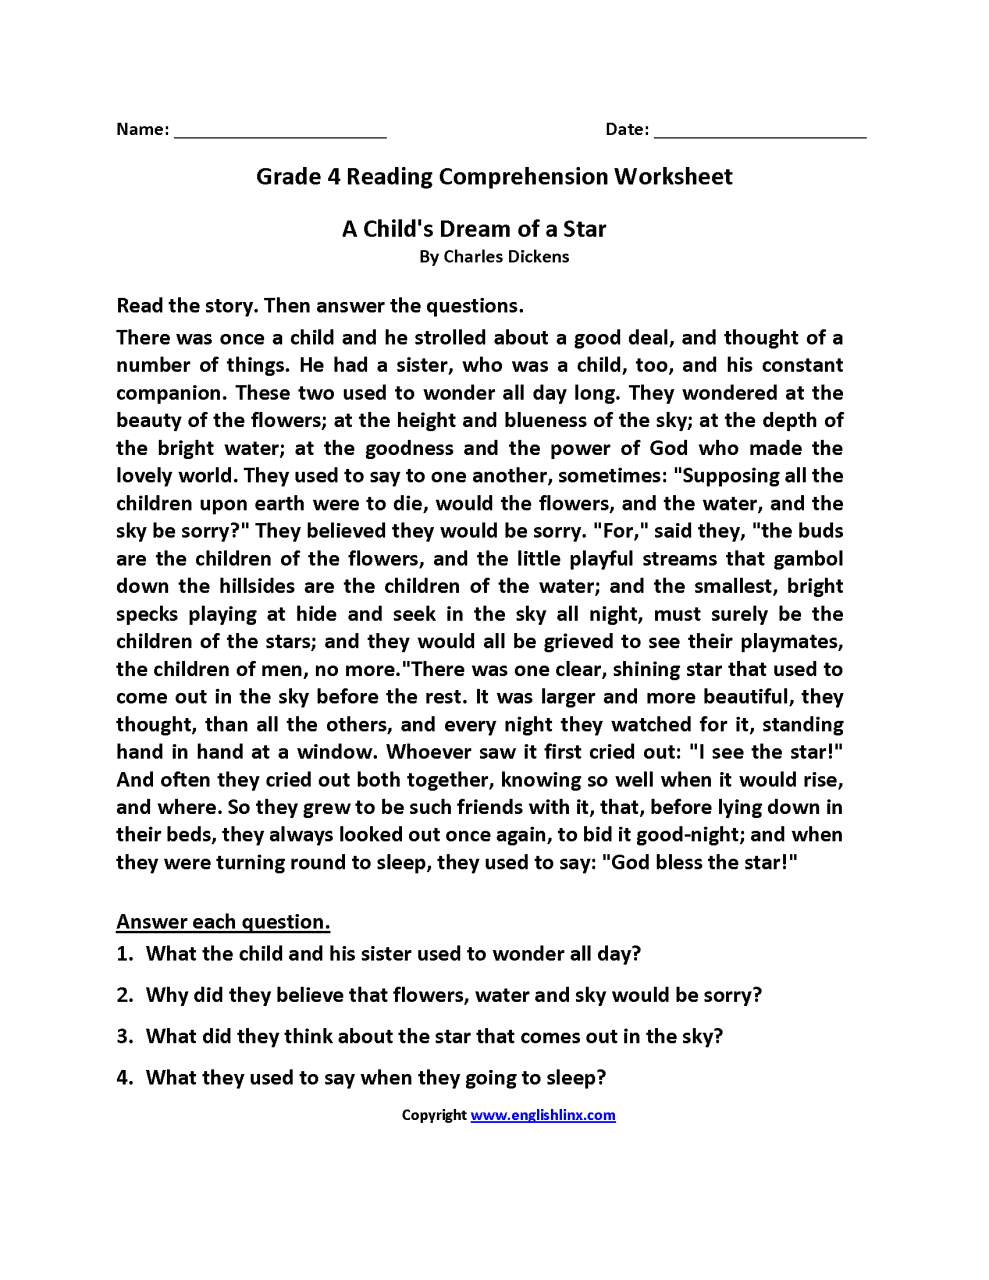 comprehension-worksheets-for-grade-4-with-answers-thekidsworksheet